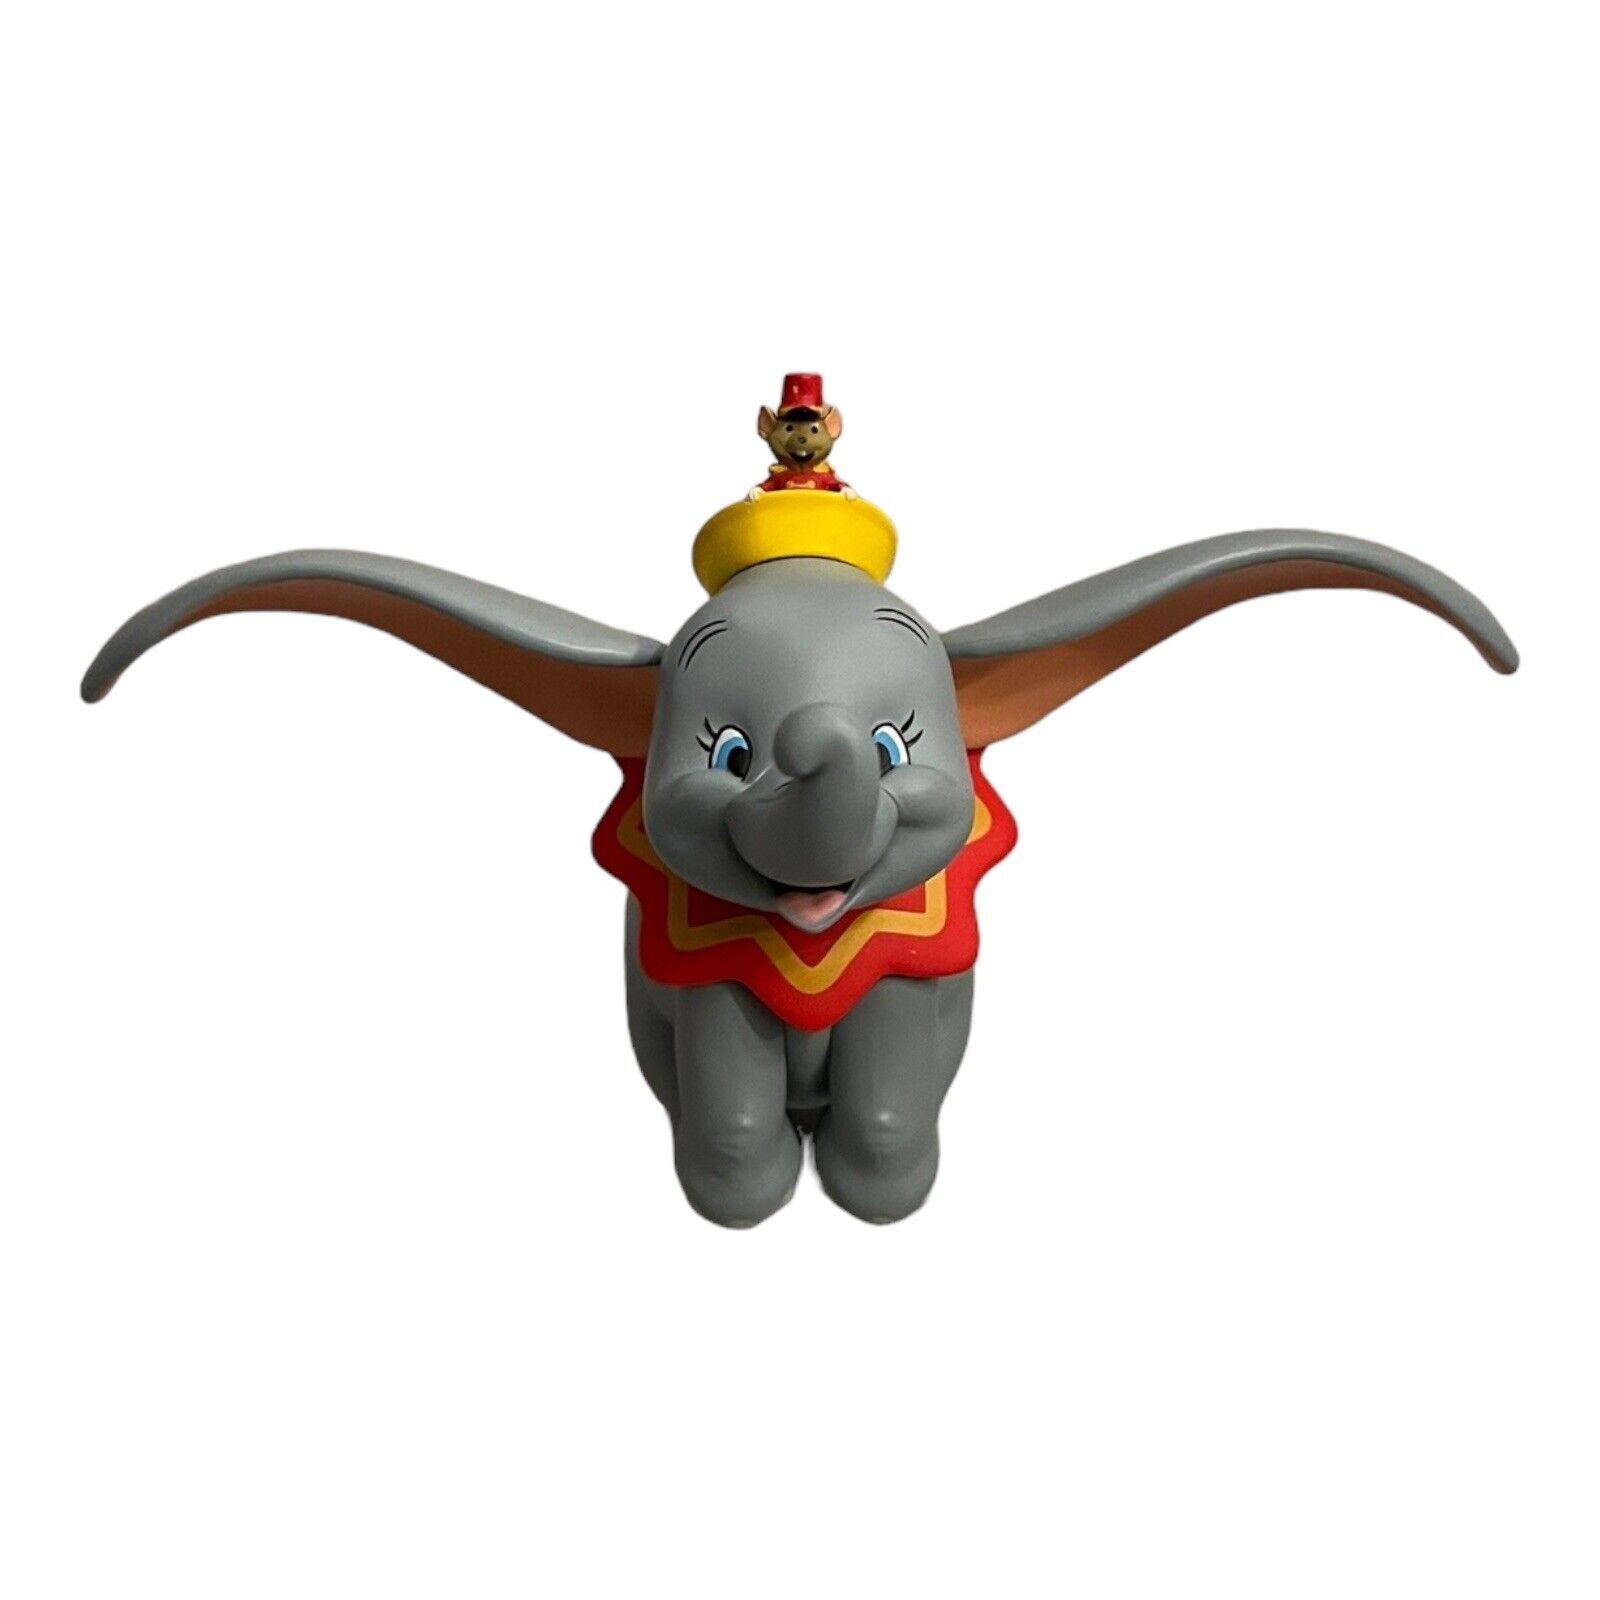 2019 Hallmark WHEN I SEE AN ELEPHANT FLY Disney Dumbo Keepsake Ornament